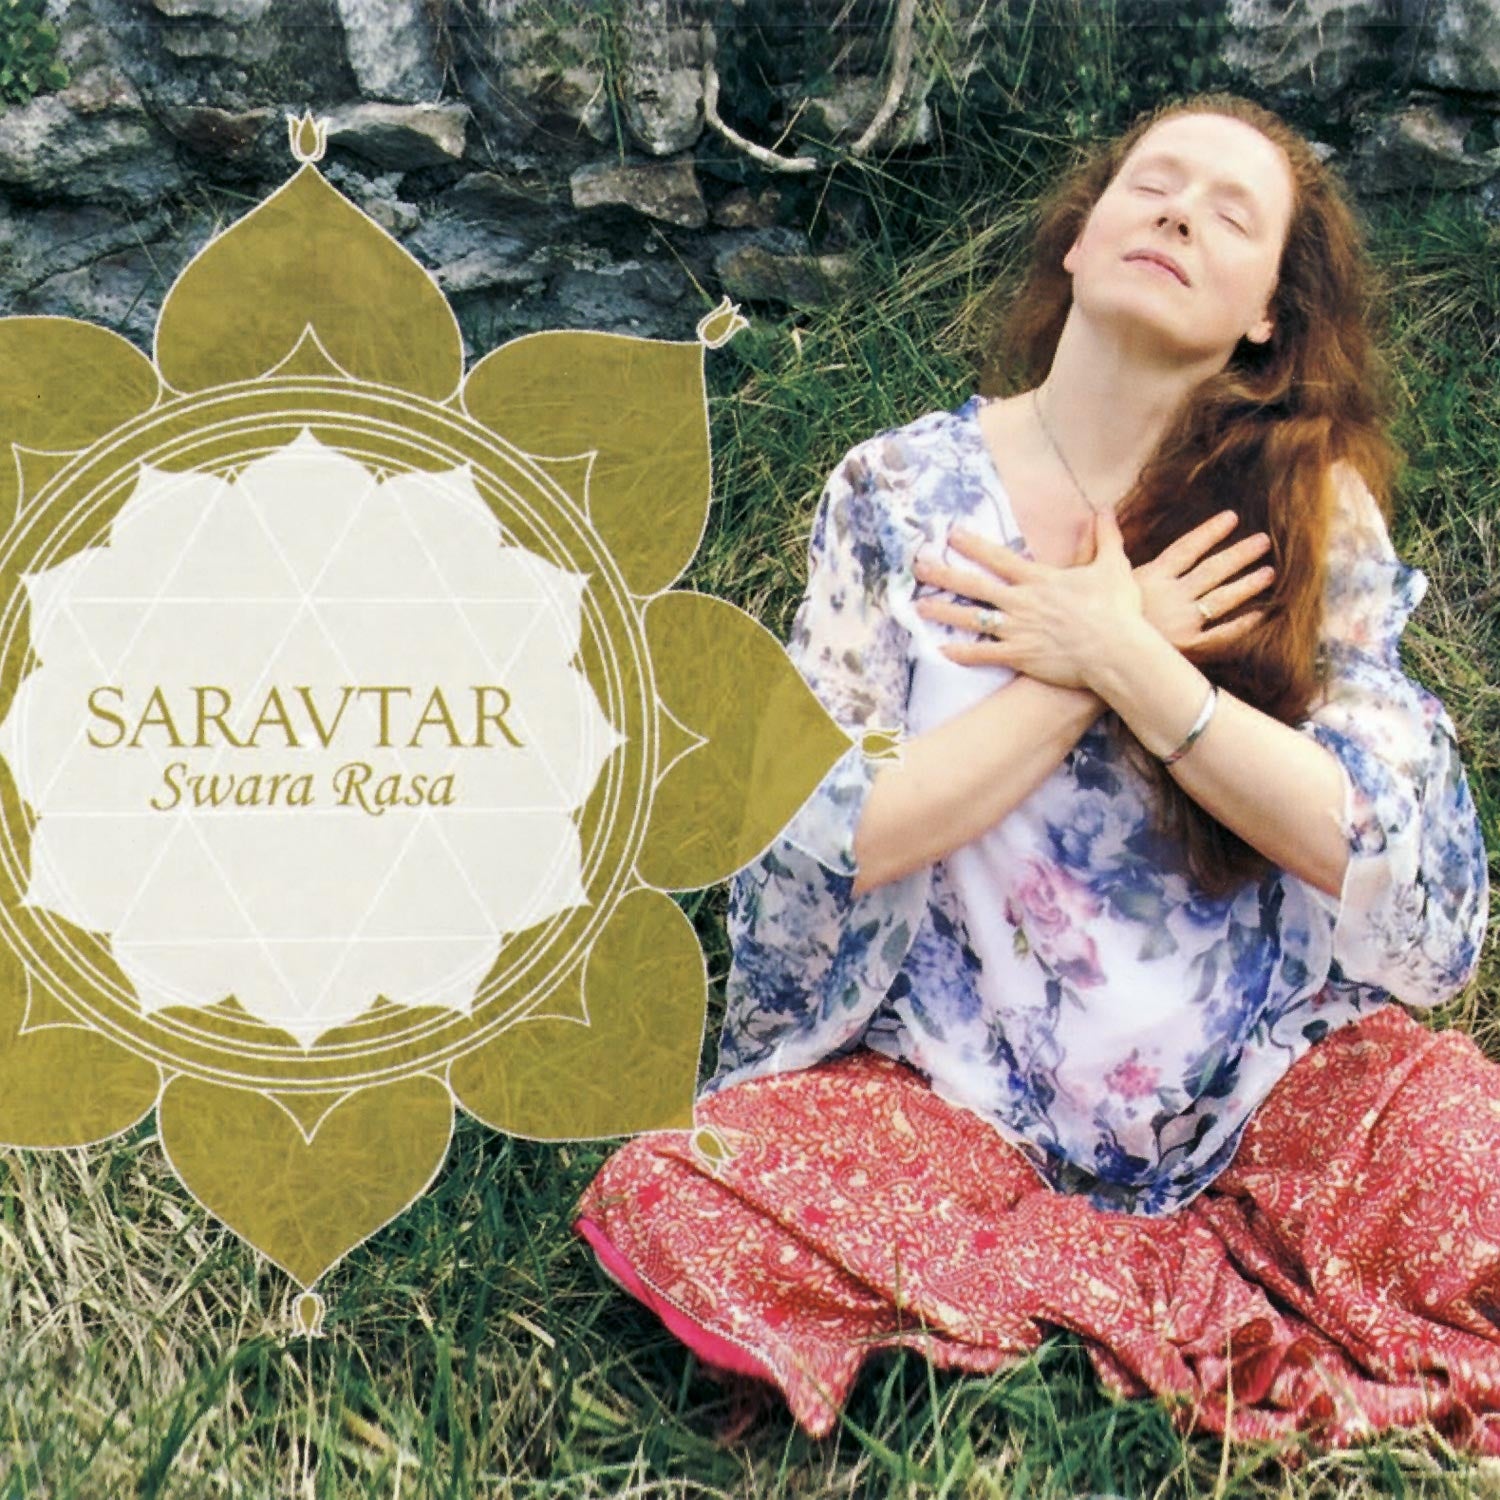 Swara Rasa - Saravtar complet